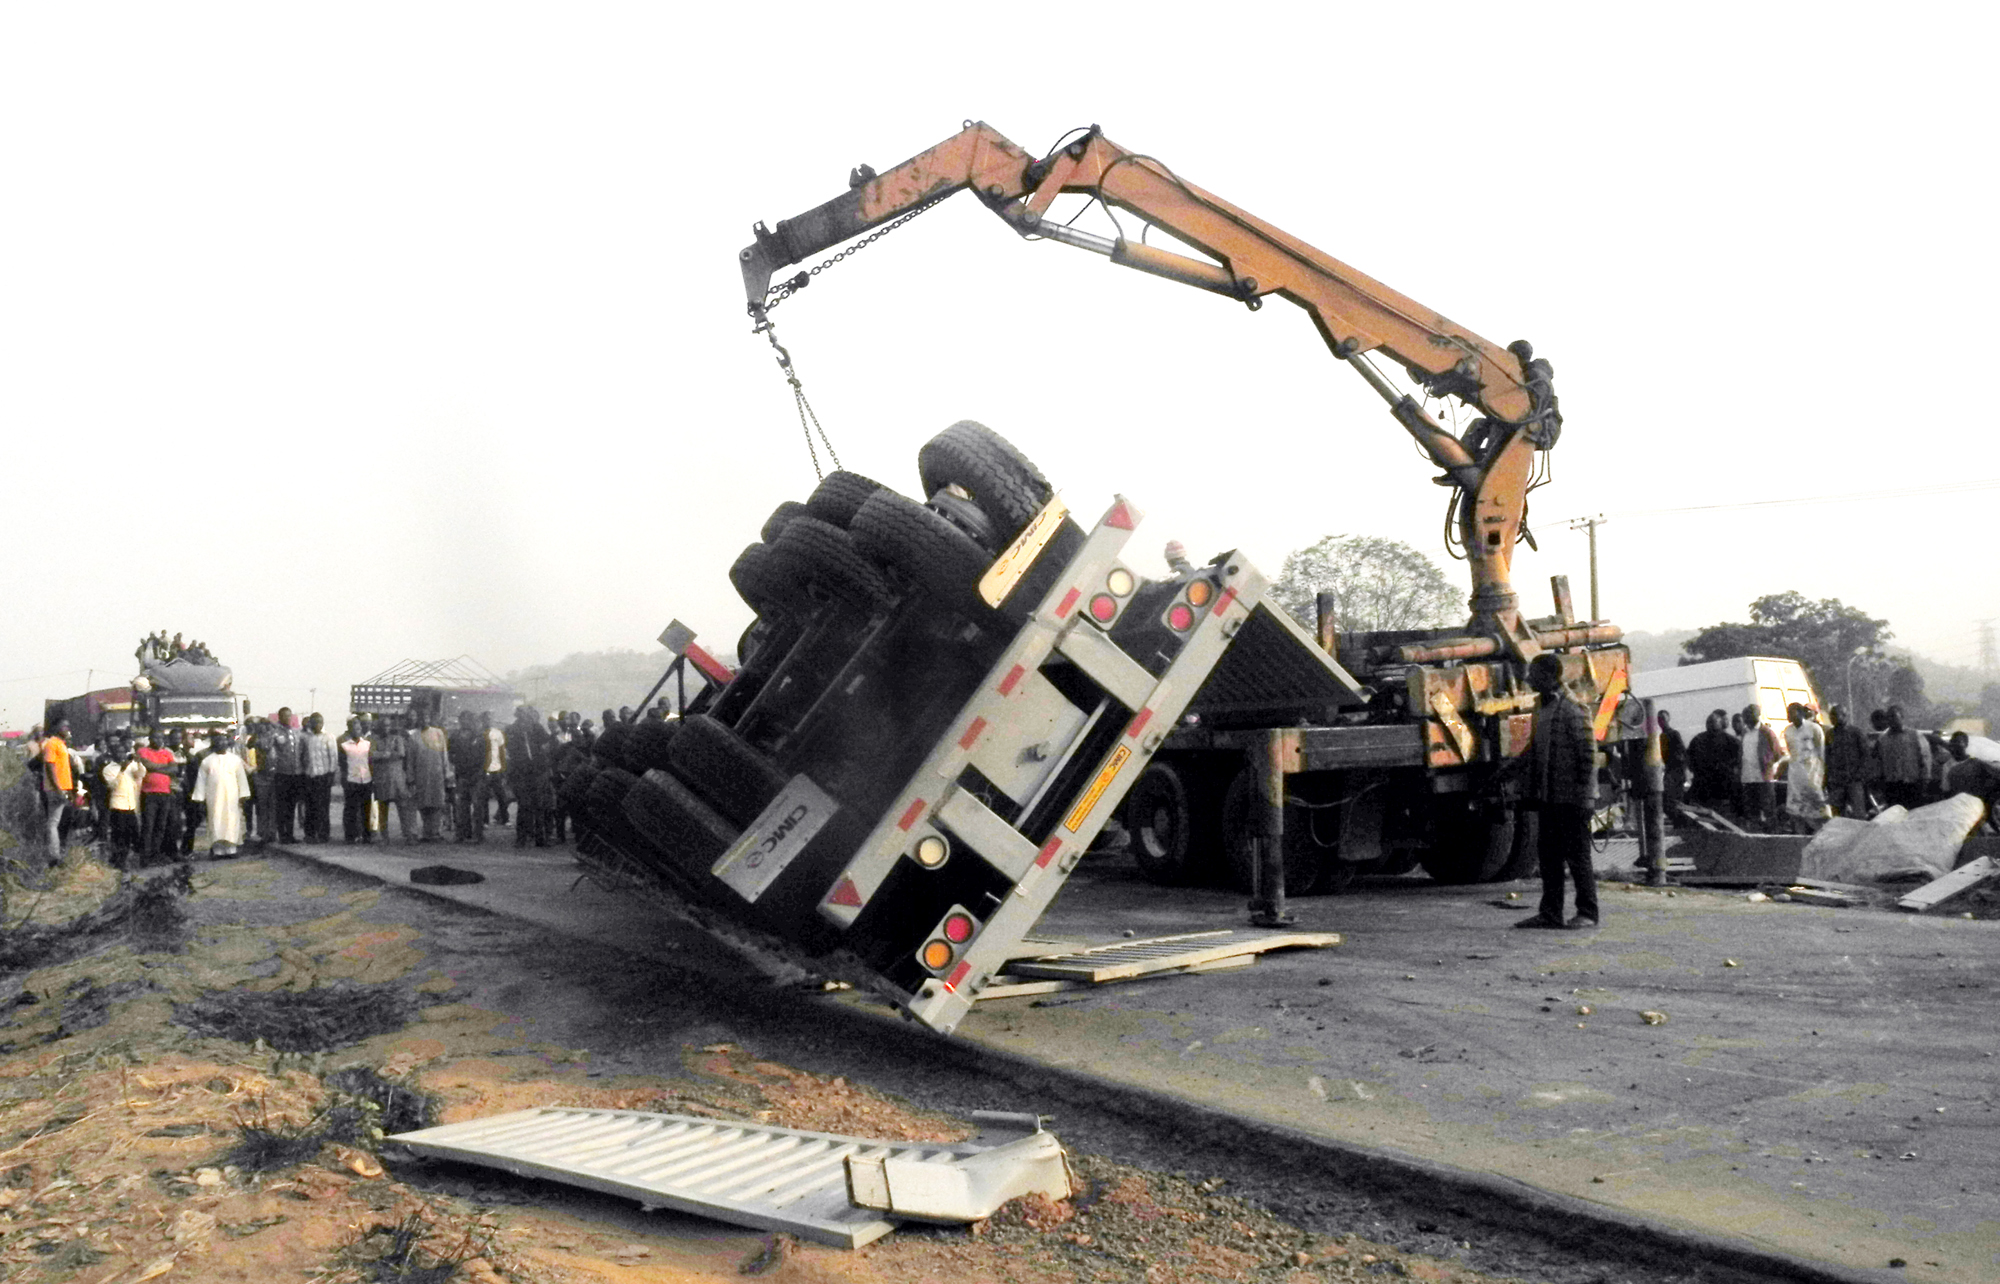 Accident In Abuja Causes Traffic Jam Near Zuma Rock (Photos) - Information Nigeria2000 x 1284